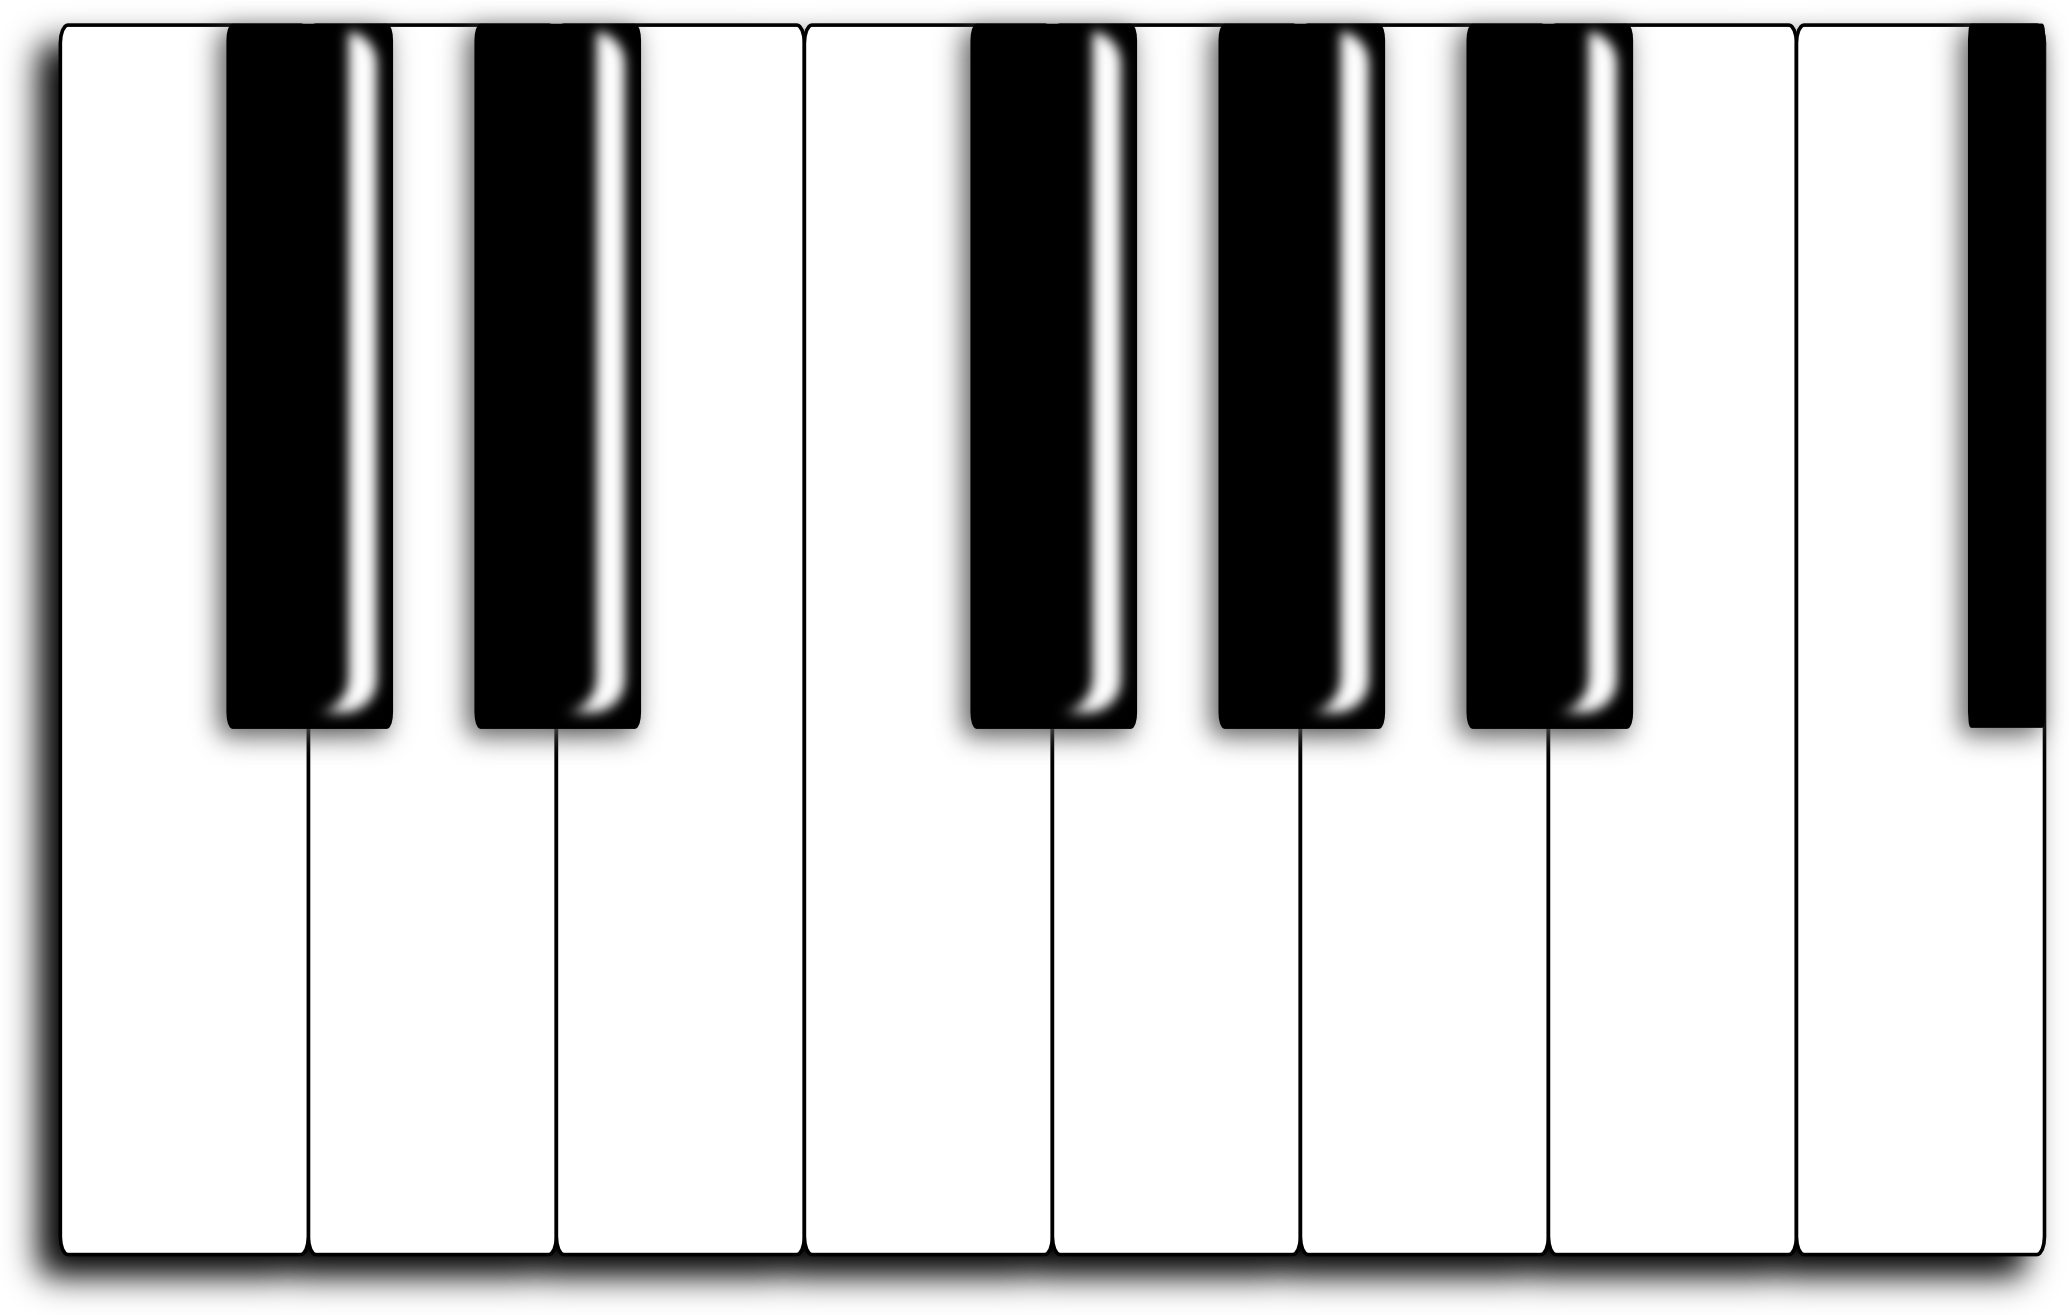 Wavy Piano Keys Clipart | Clipart Panda - Free Clipart Images